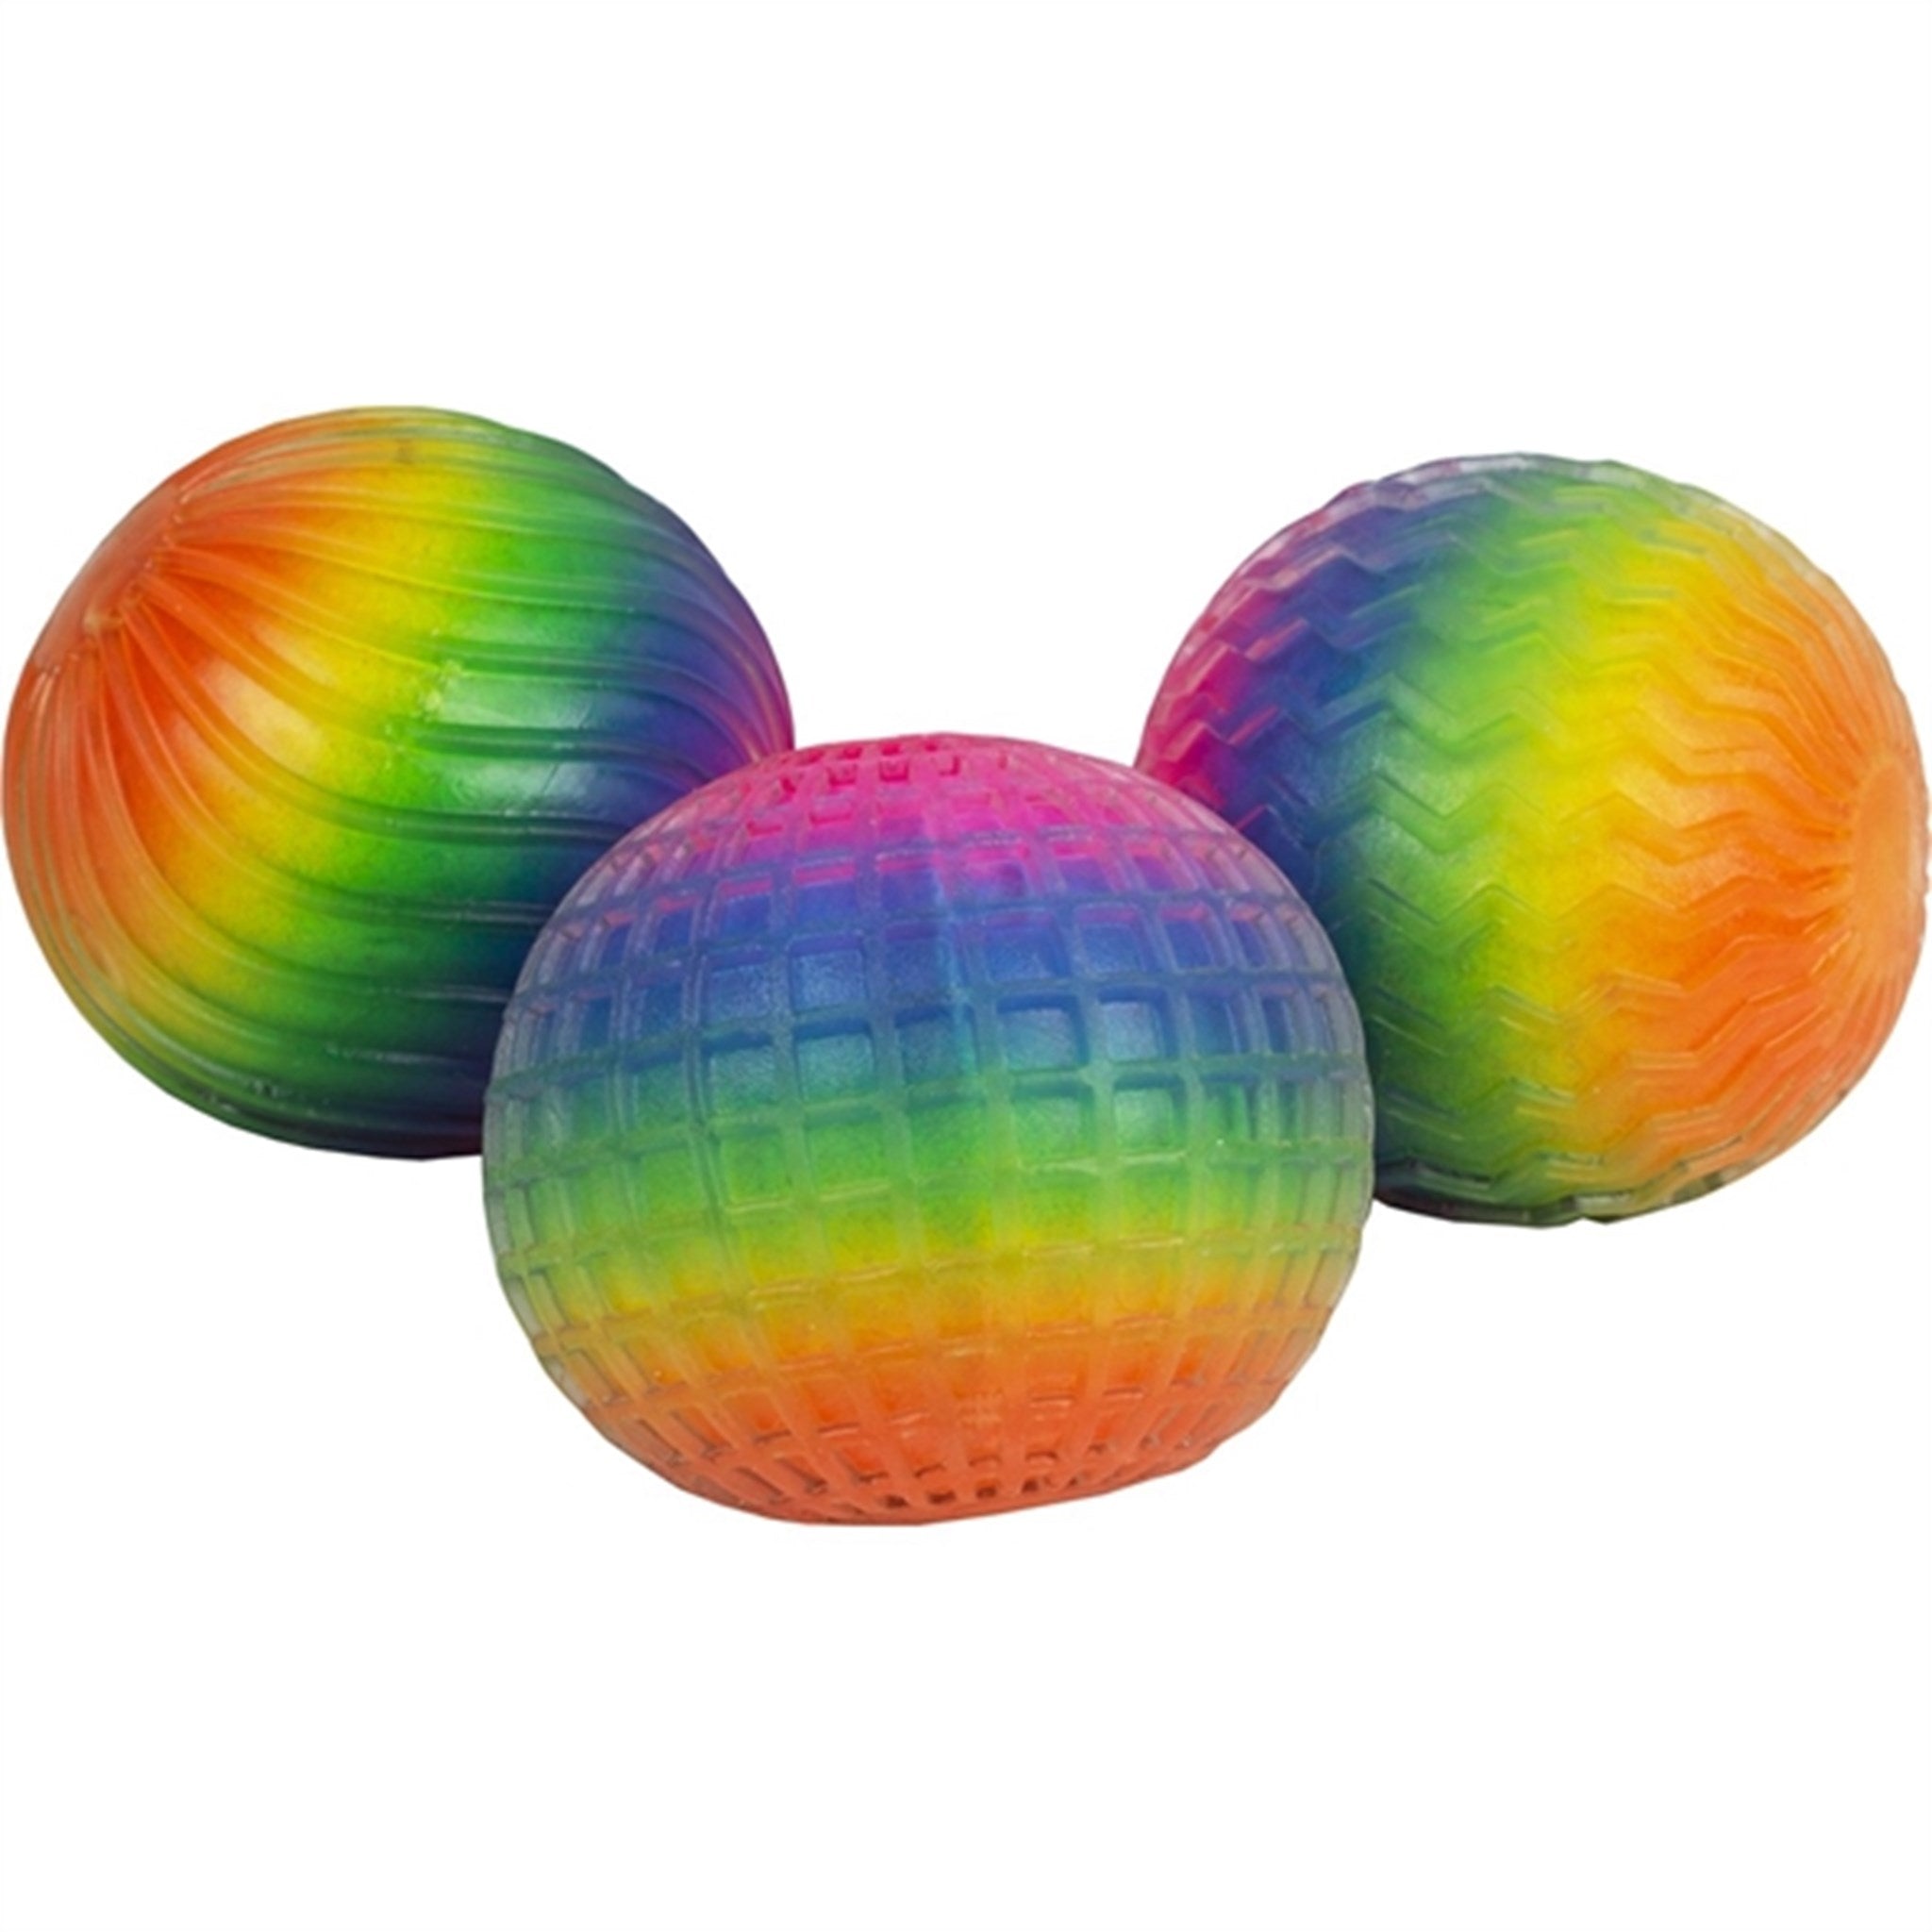 Magni Stress Ball 7 cm Rainbow Colors